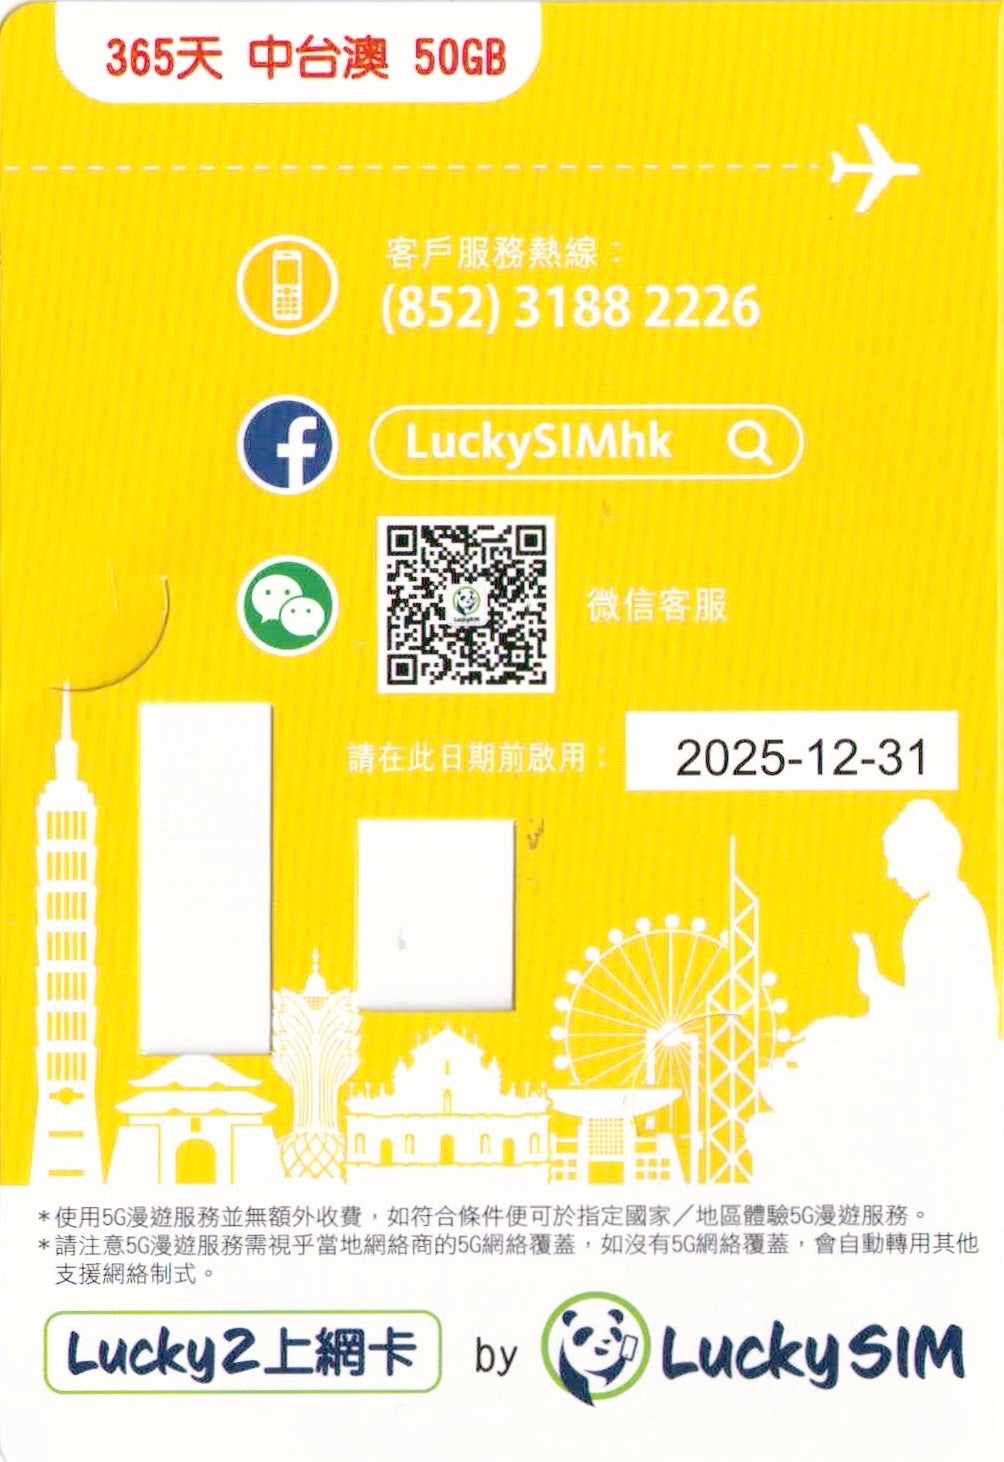 Lucky2 50GB 【中國 台灣 澳門 】中台澳 365日 LTE 純數據 漫遊數據卡 年卡